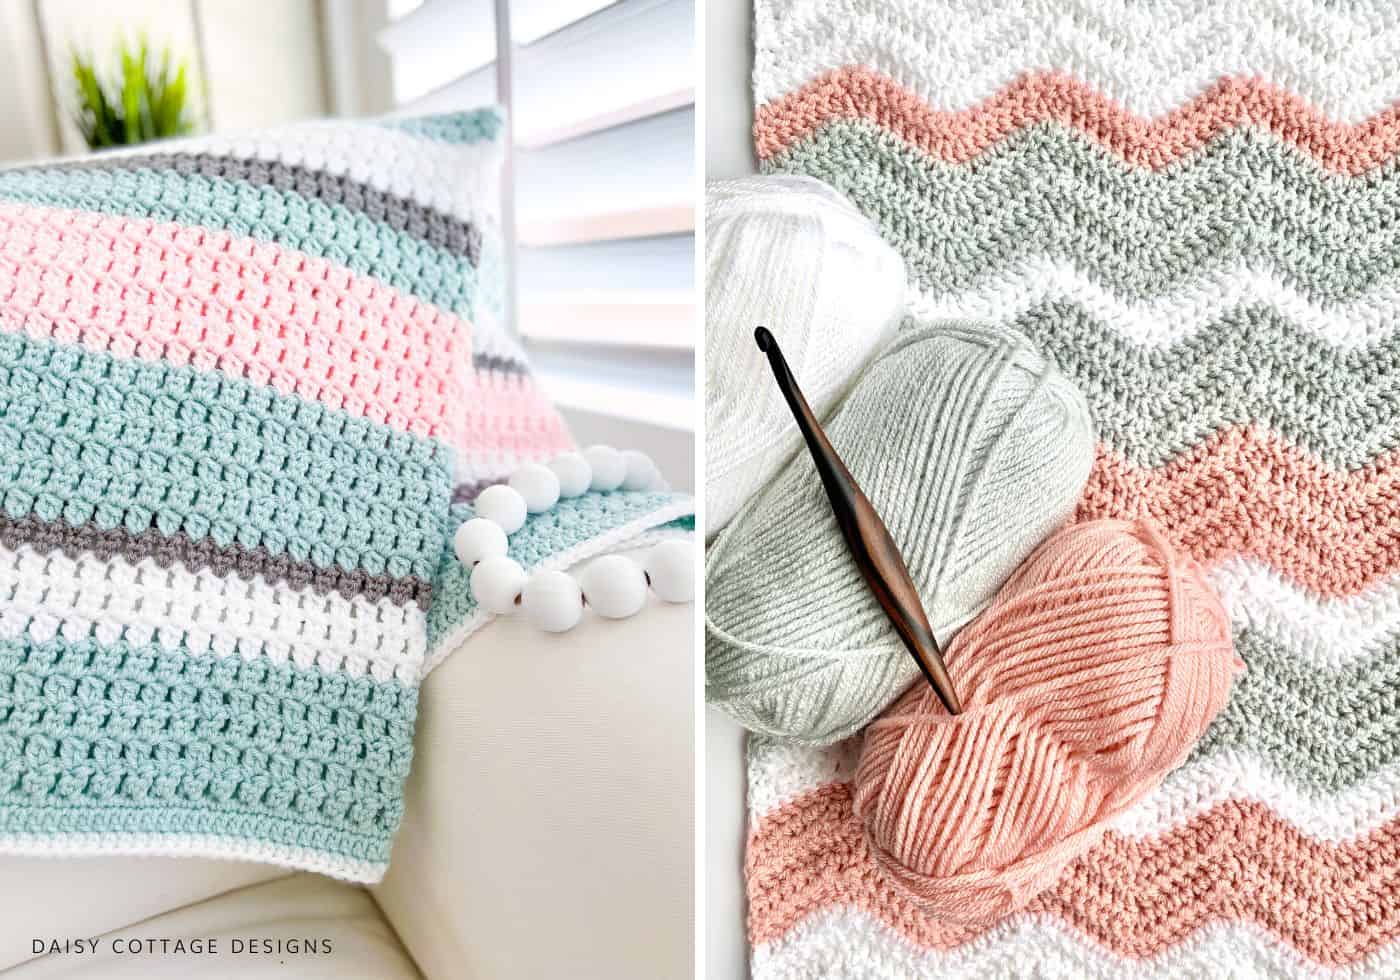 Classic easy crochet blankets